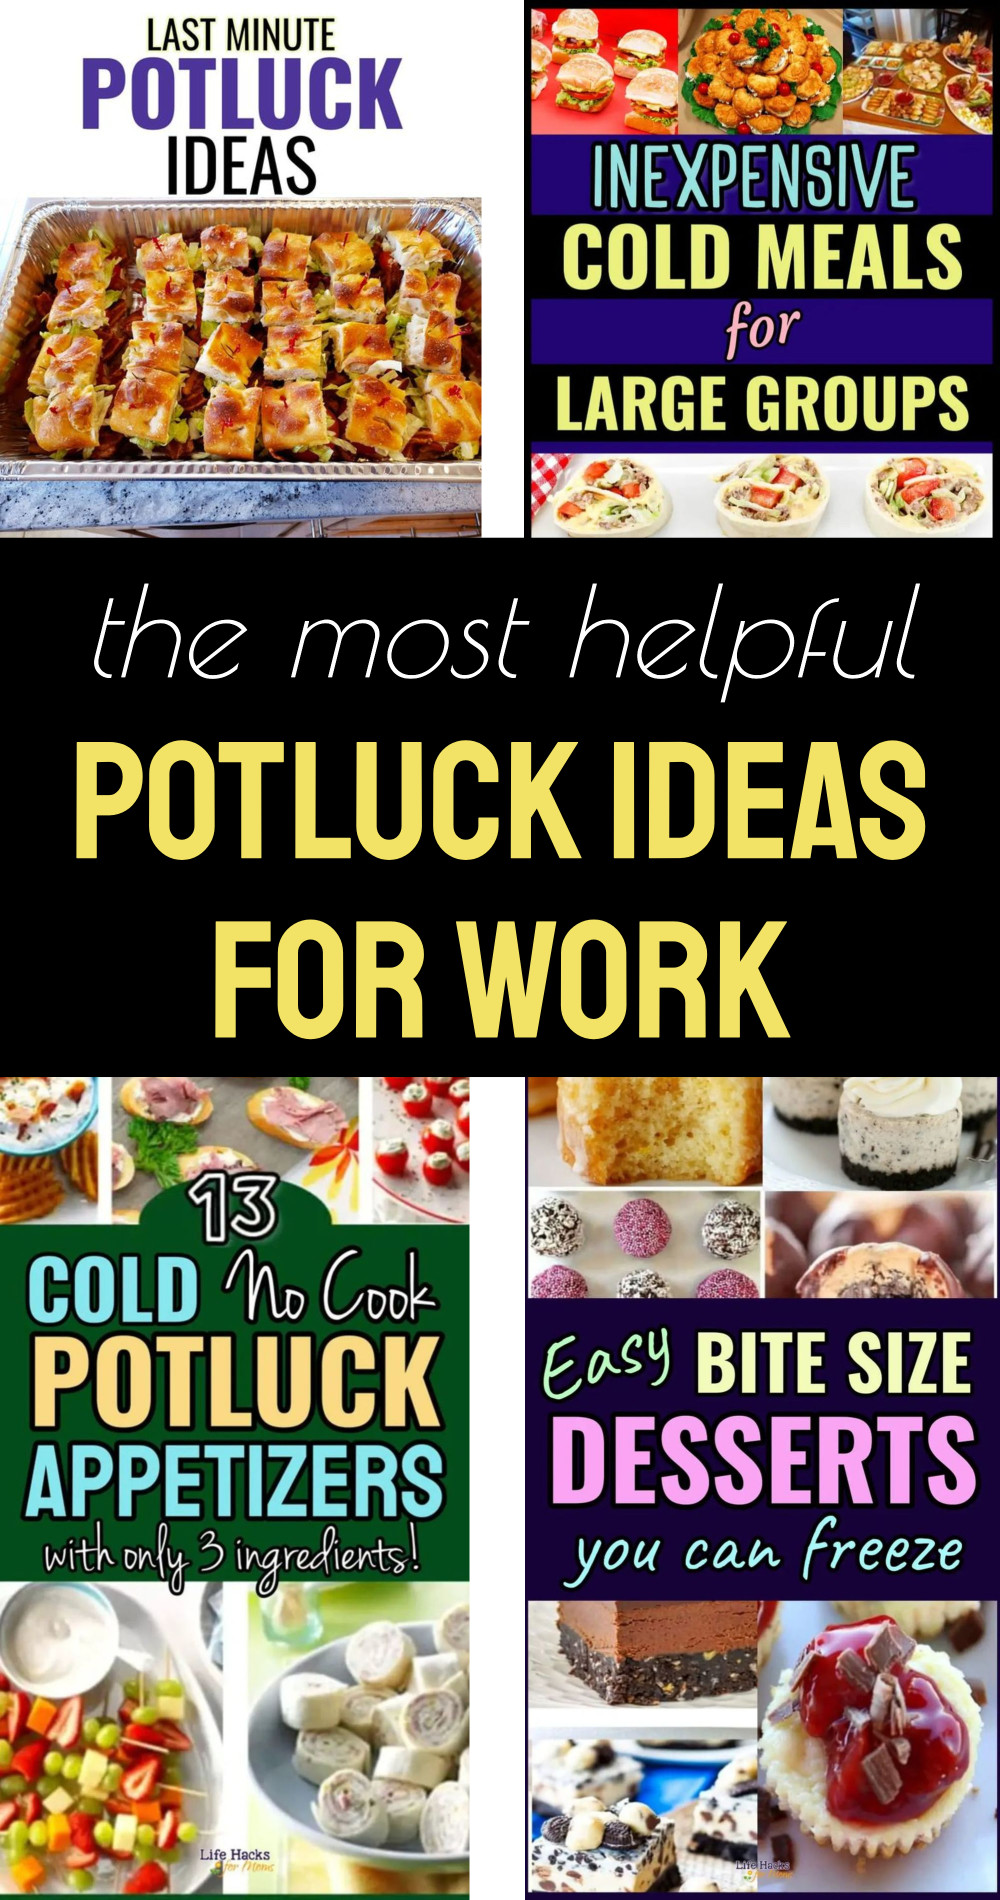 4 helpful potluck ideas for work